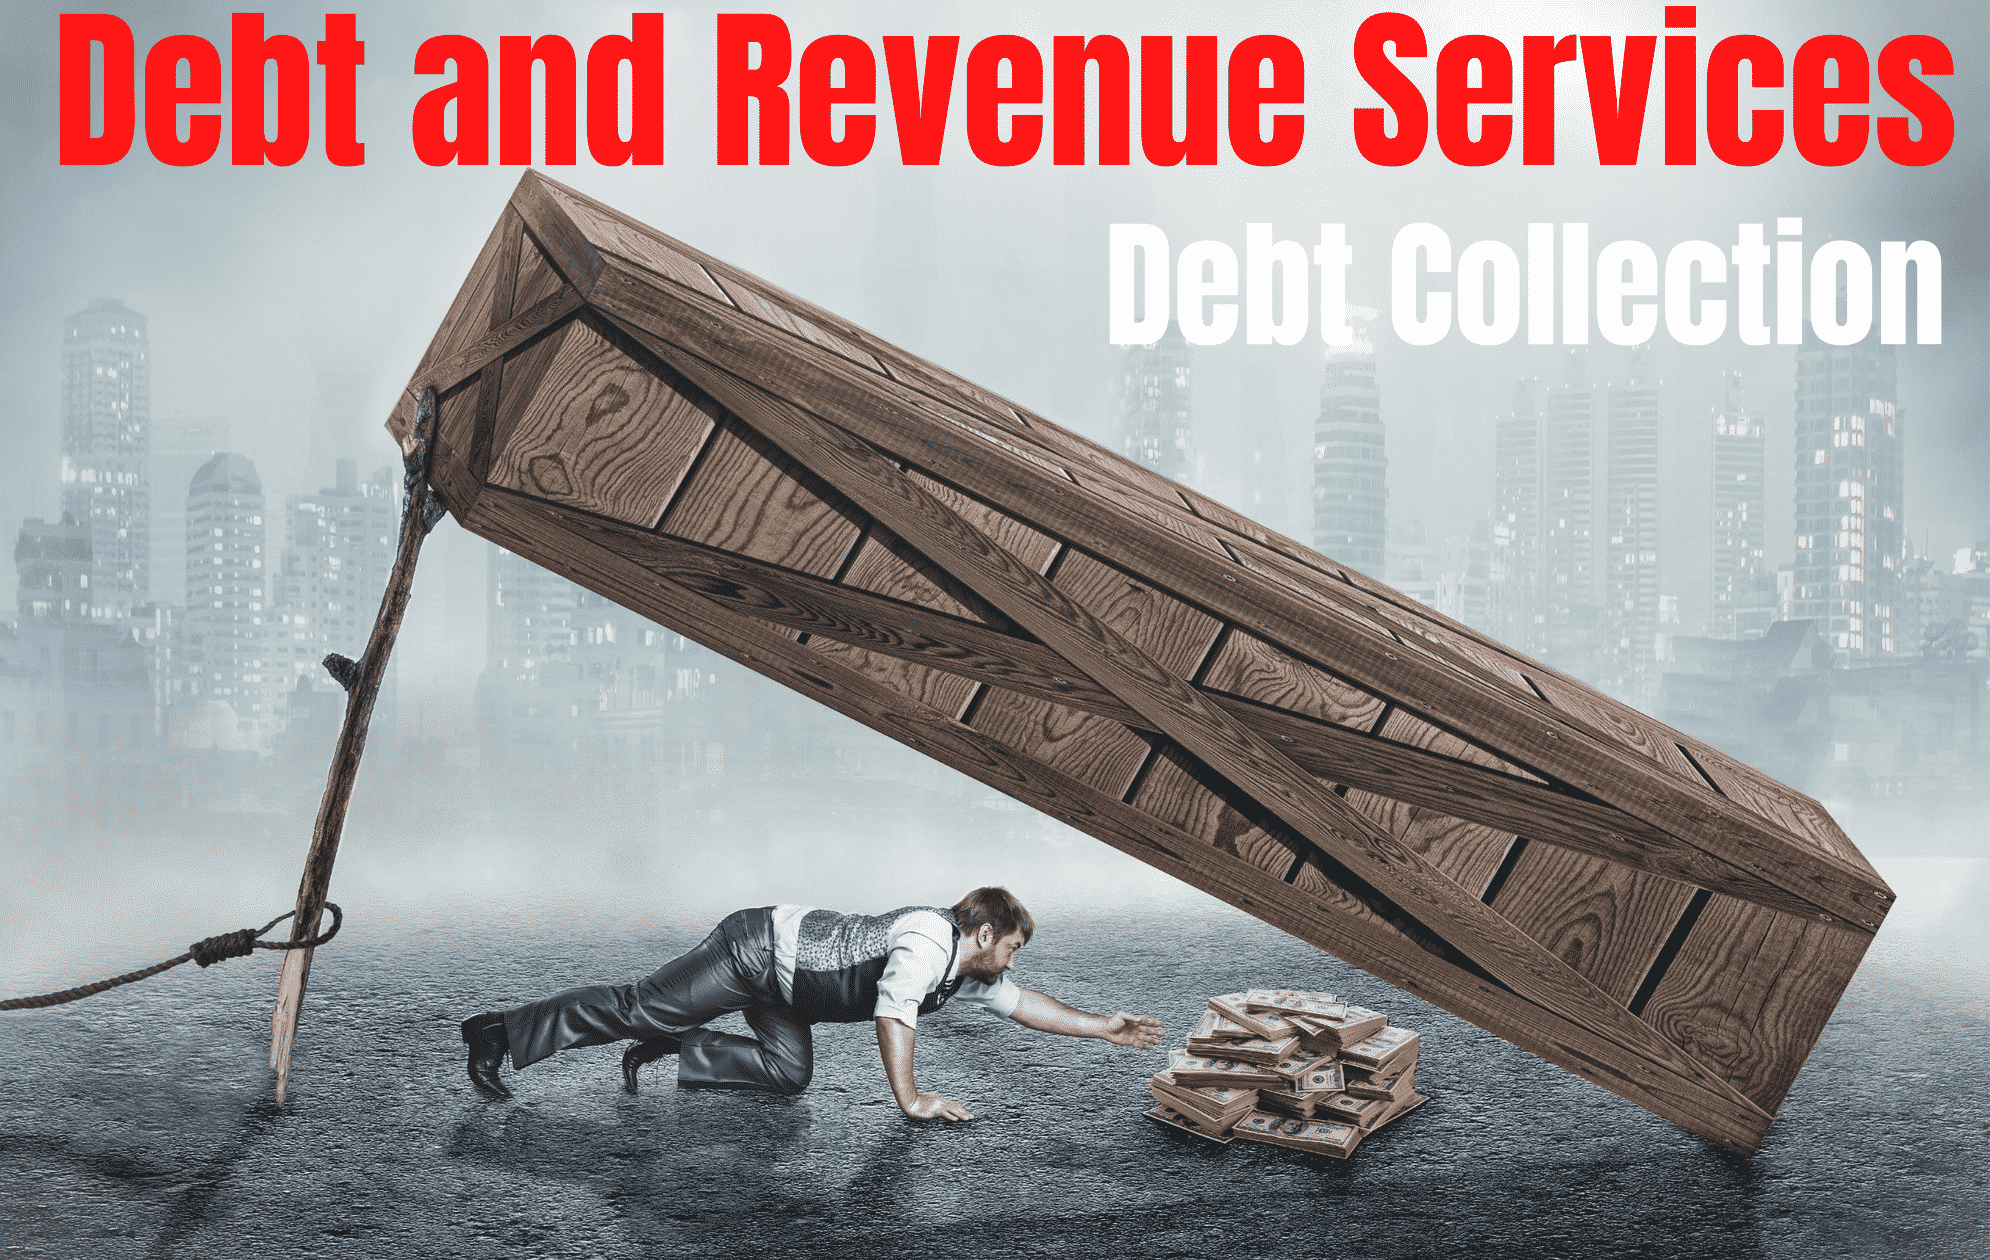 debt-and-revenue-service-debt-collection